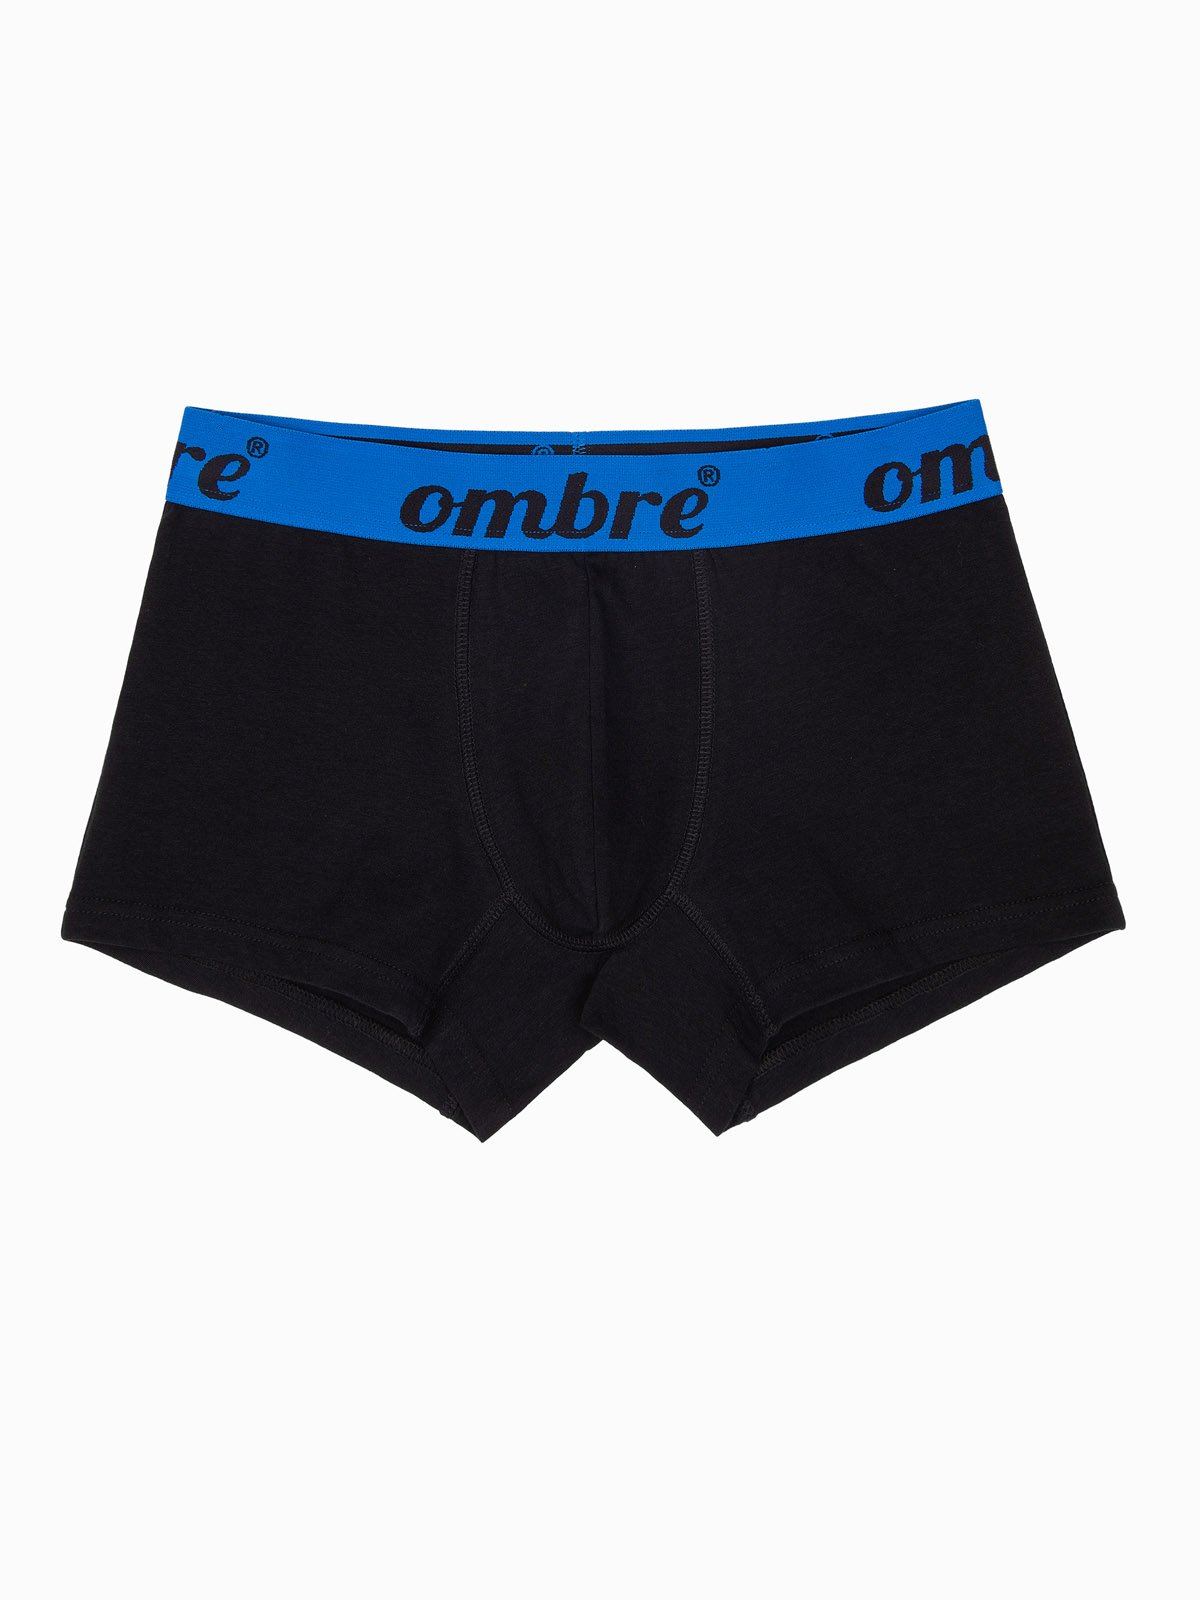 Ombre Men's underpants -